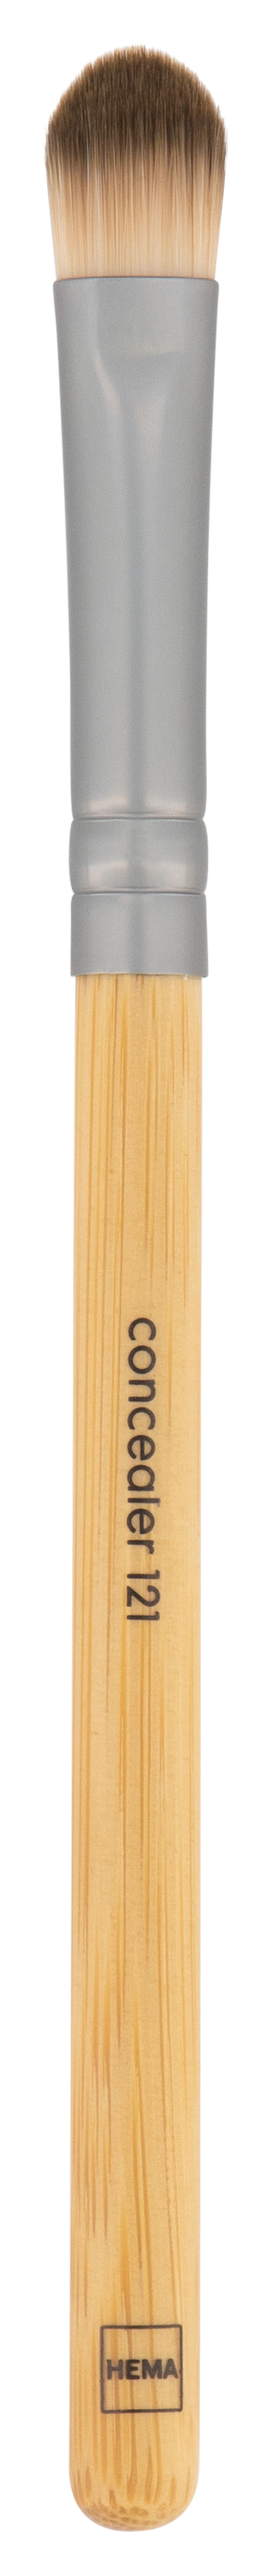 Image of HEMA Concealer Brush 121